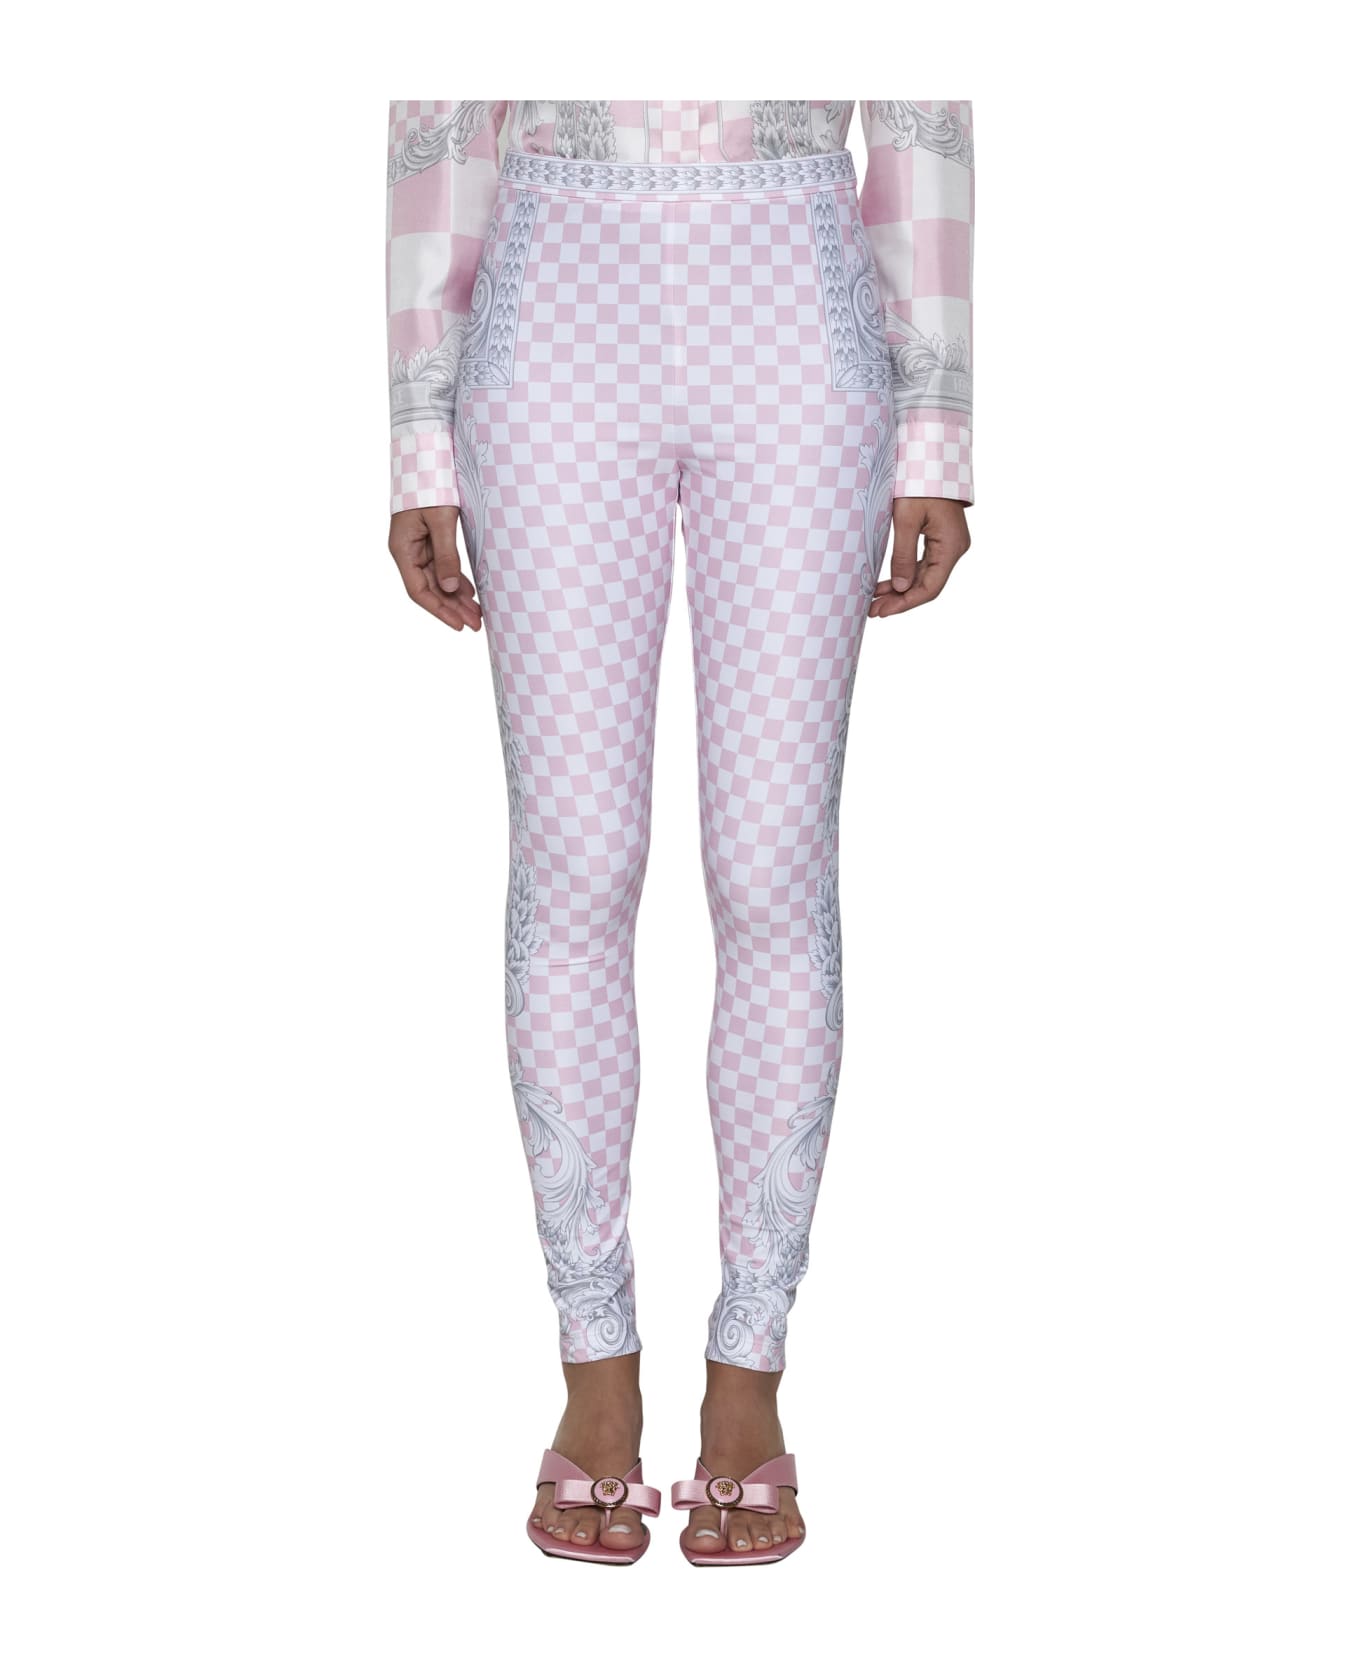 Versace Pants - Pastel pink + white + silver レギンス